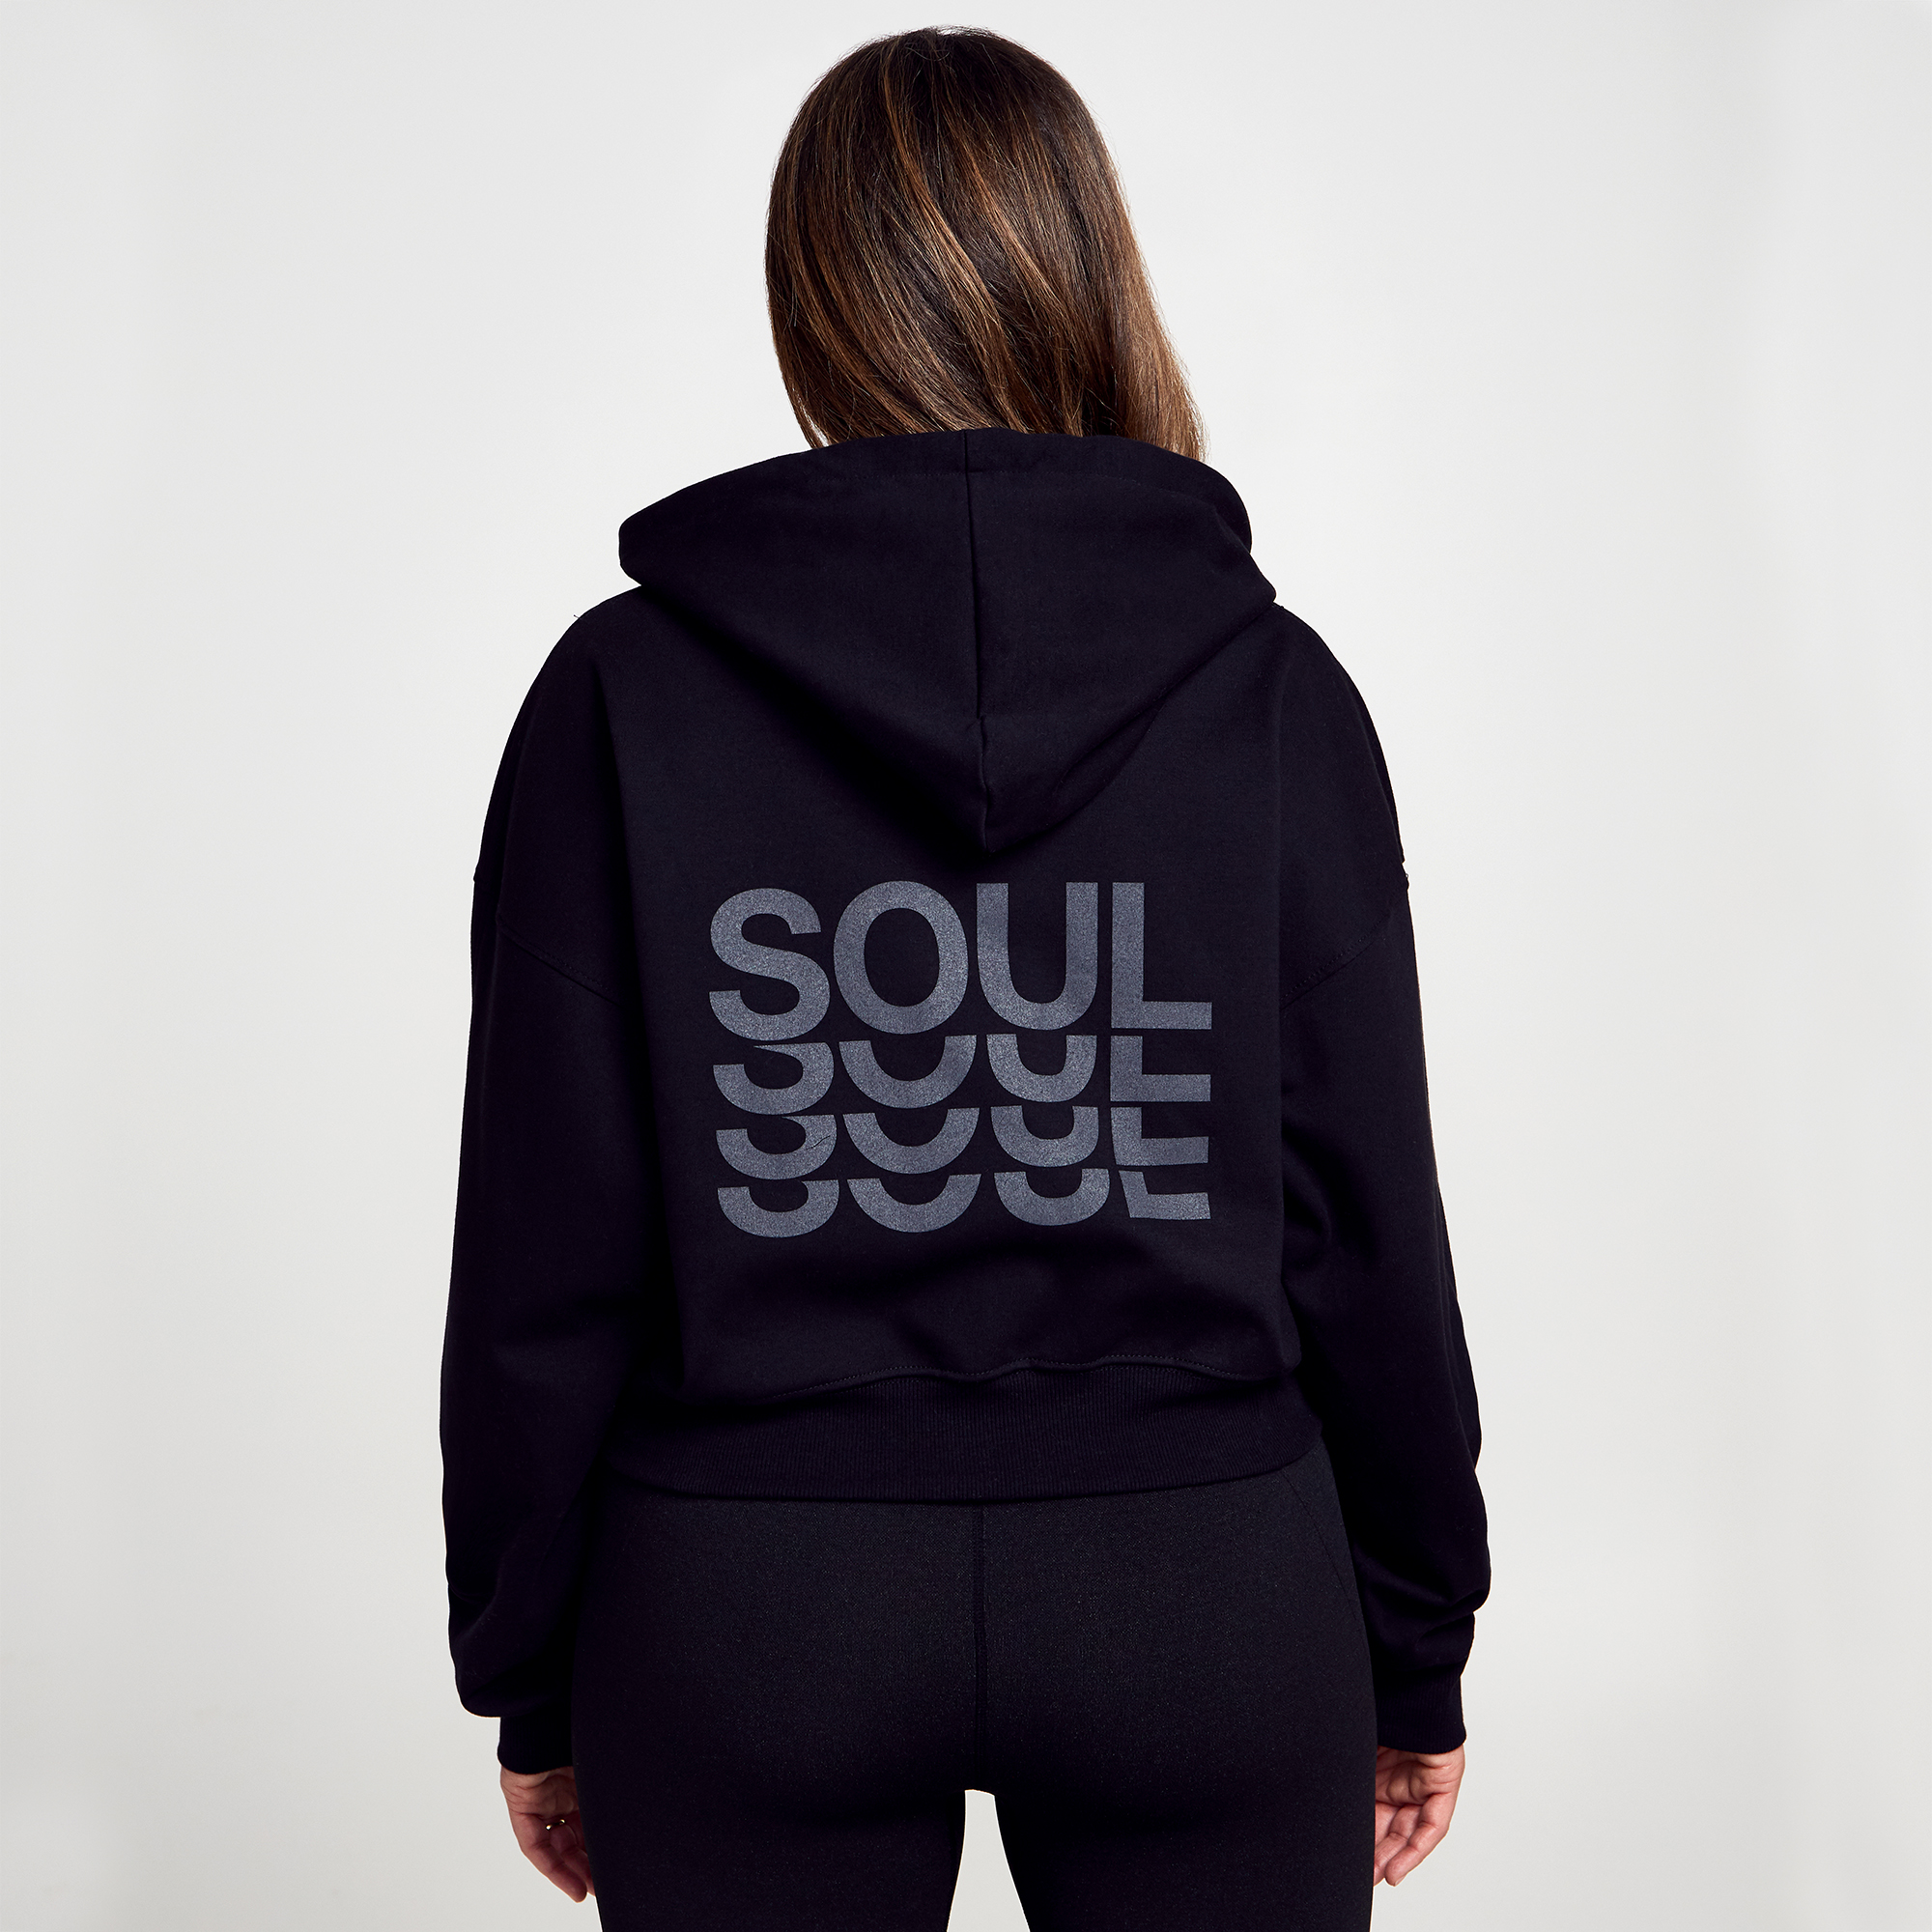 Soul by SoulCycle Zip Up Crop Hoodie - SoulCycle Shop